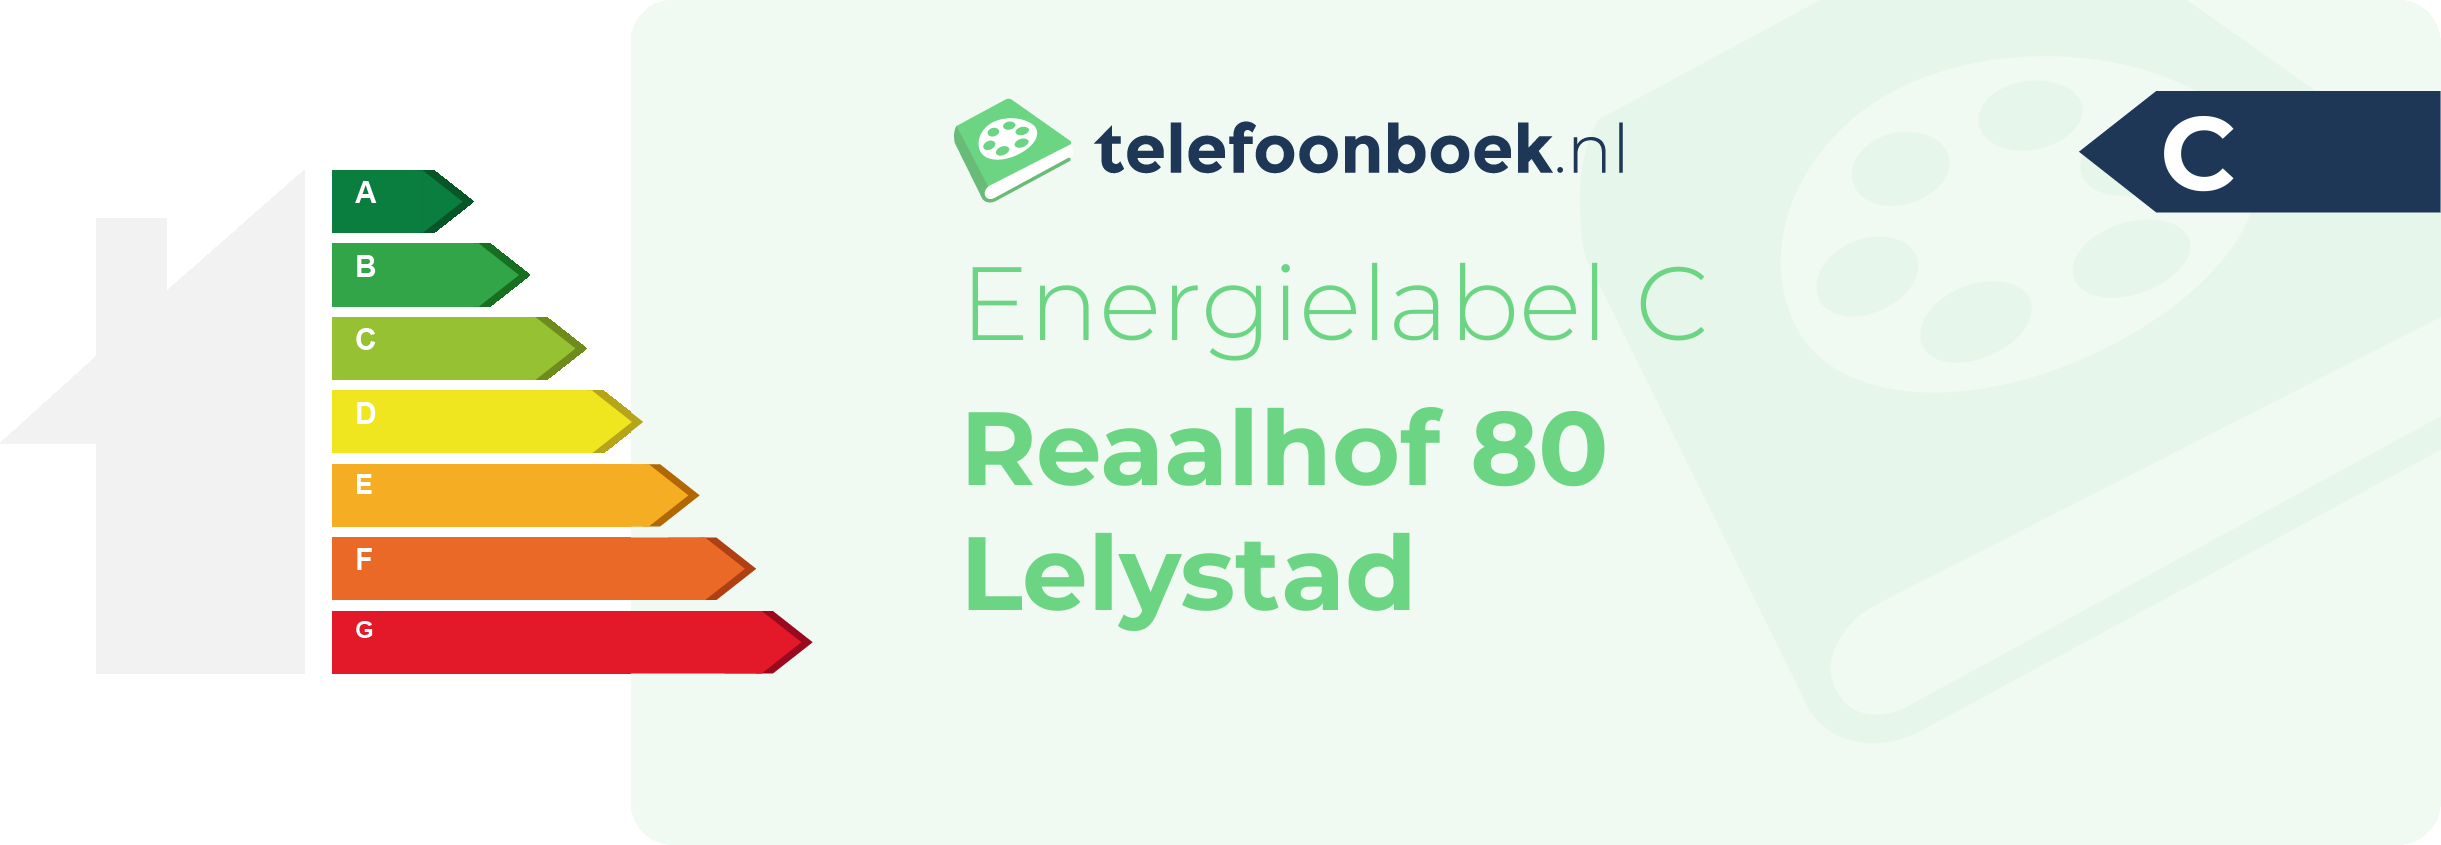 Energielabel Reaalhof 80 Lelystad